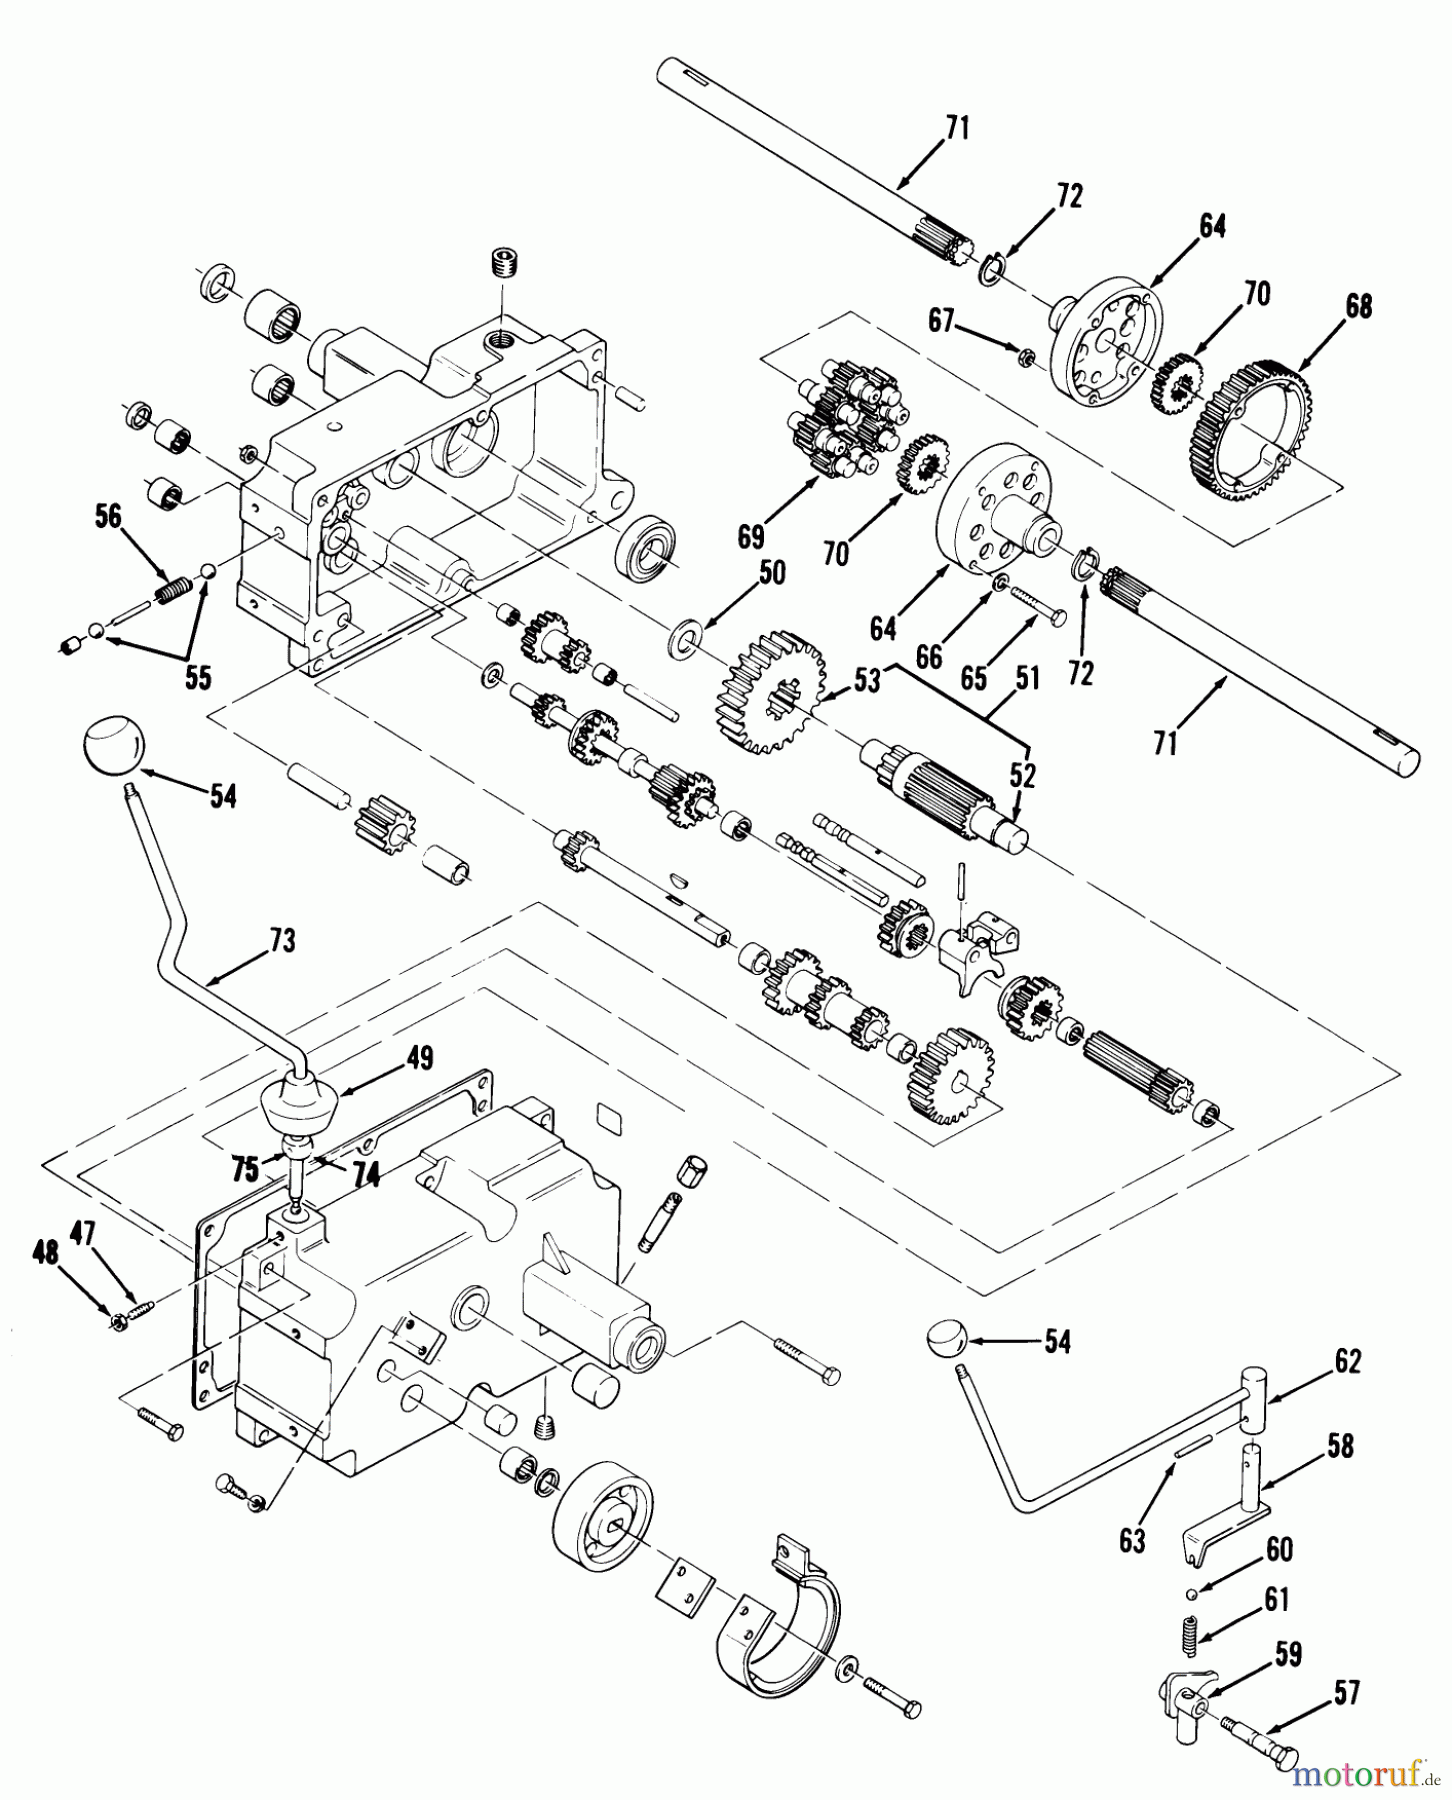  Toro Neu Mowers, Lawn & Garden Tractor Seite 1 01-14E801 (E-141) - Toro E-141 8-Speed Tractor, 1981 MECHANICAL TRANSMISSION-8 SPEED #2